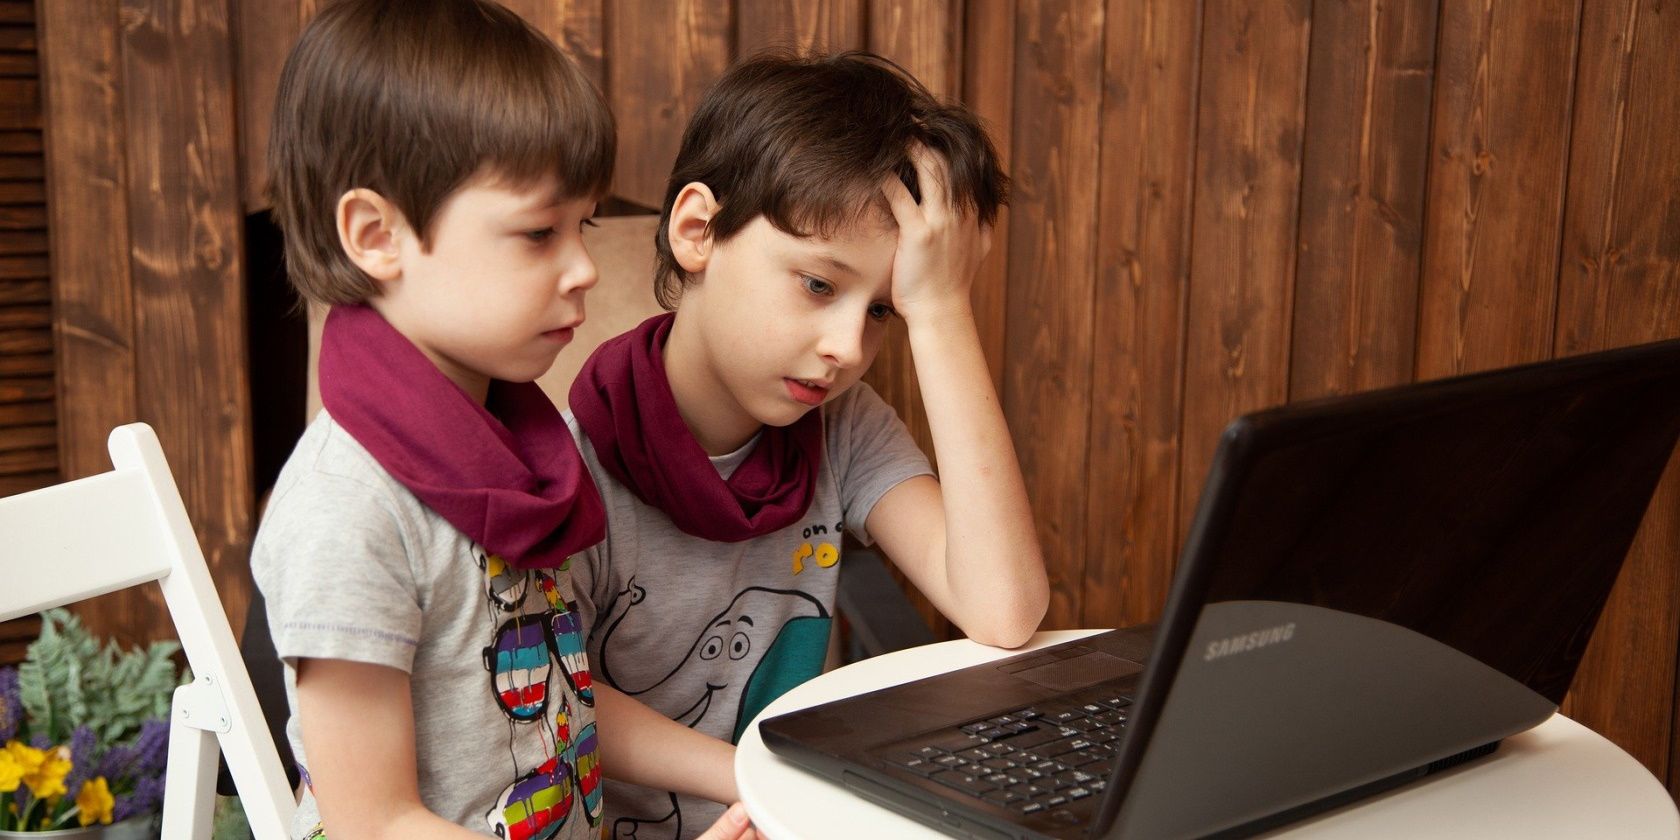 Kids using a laptop